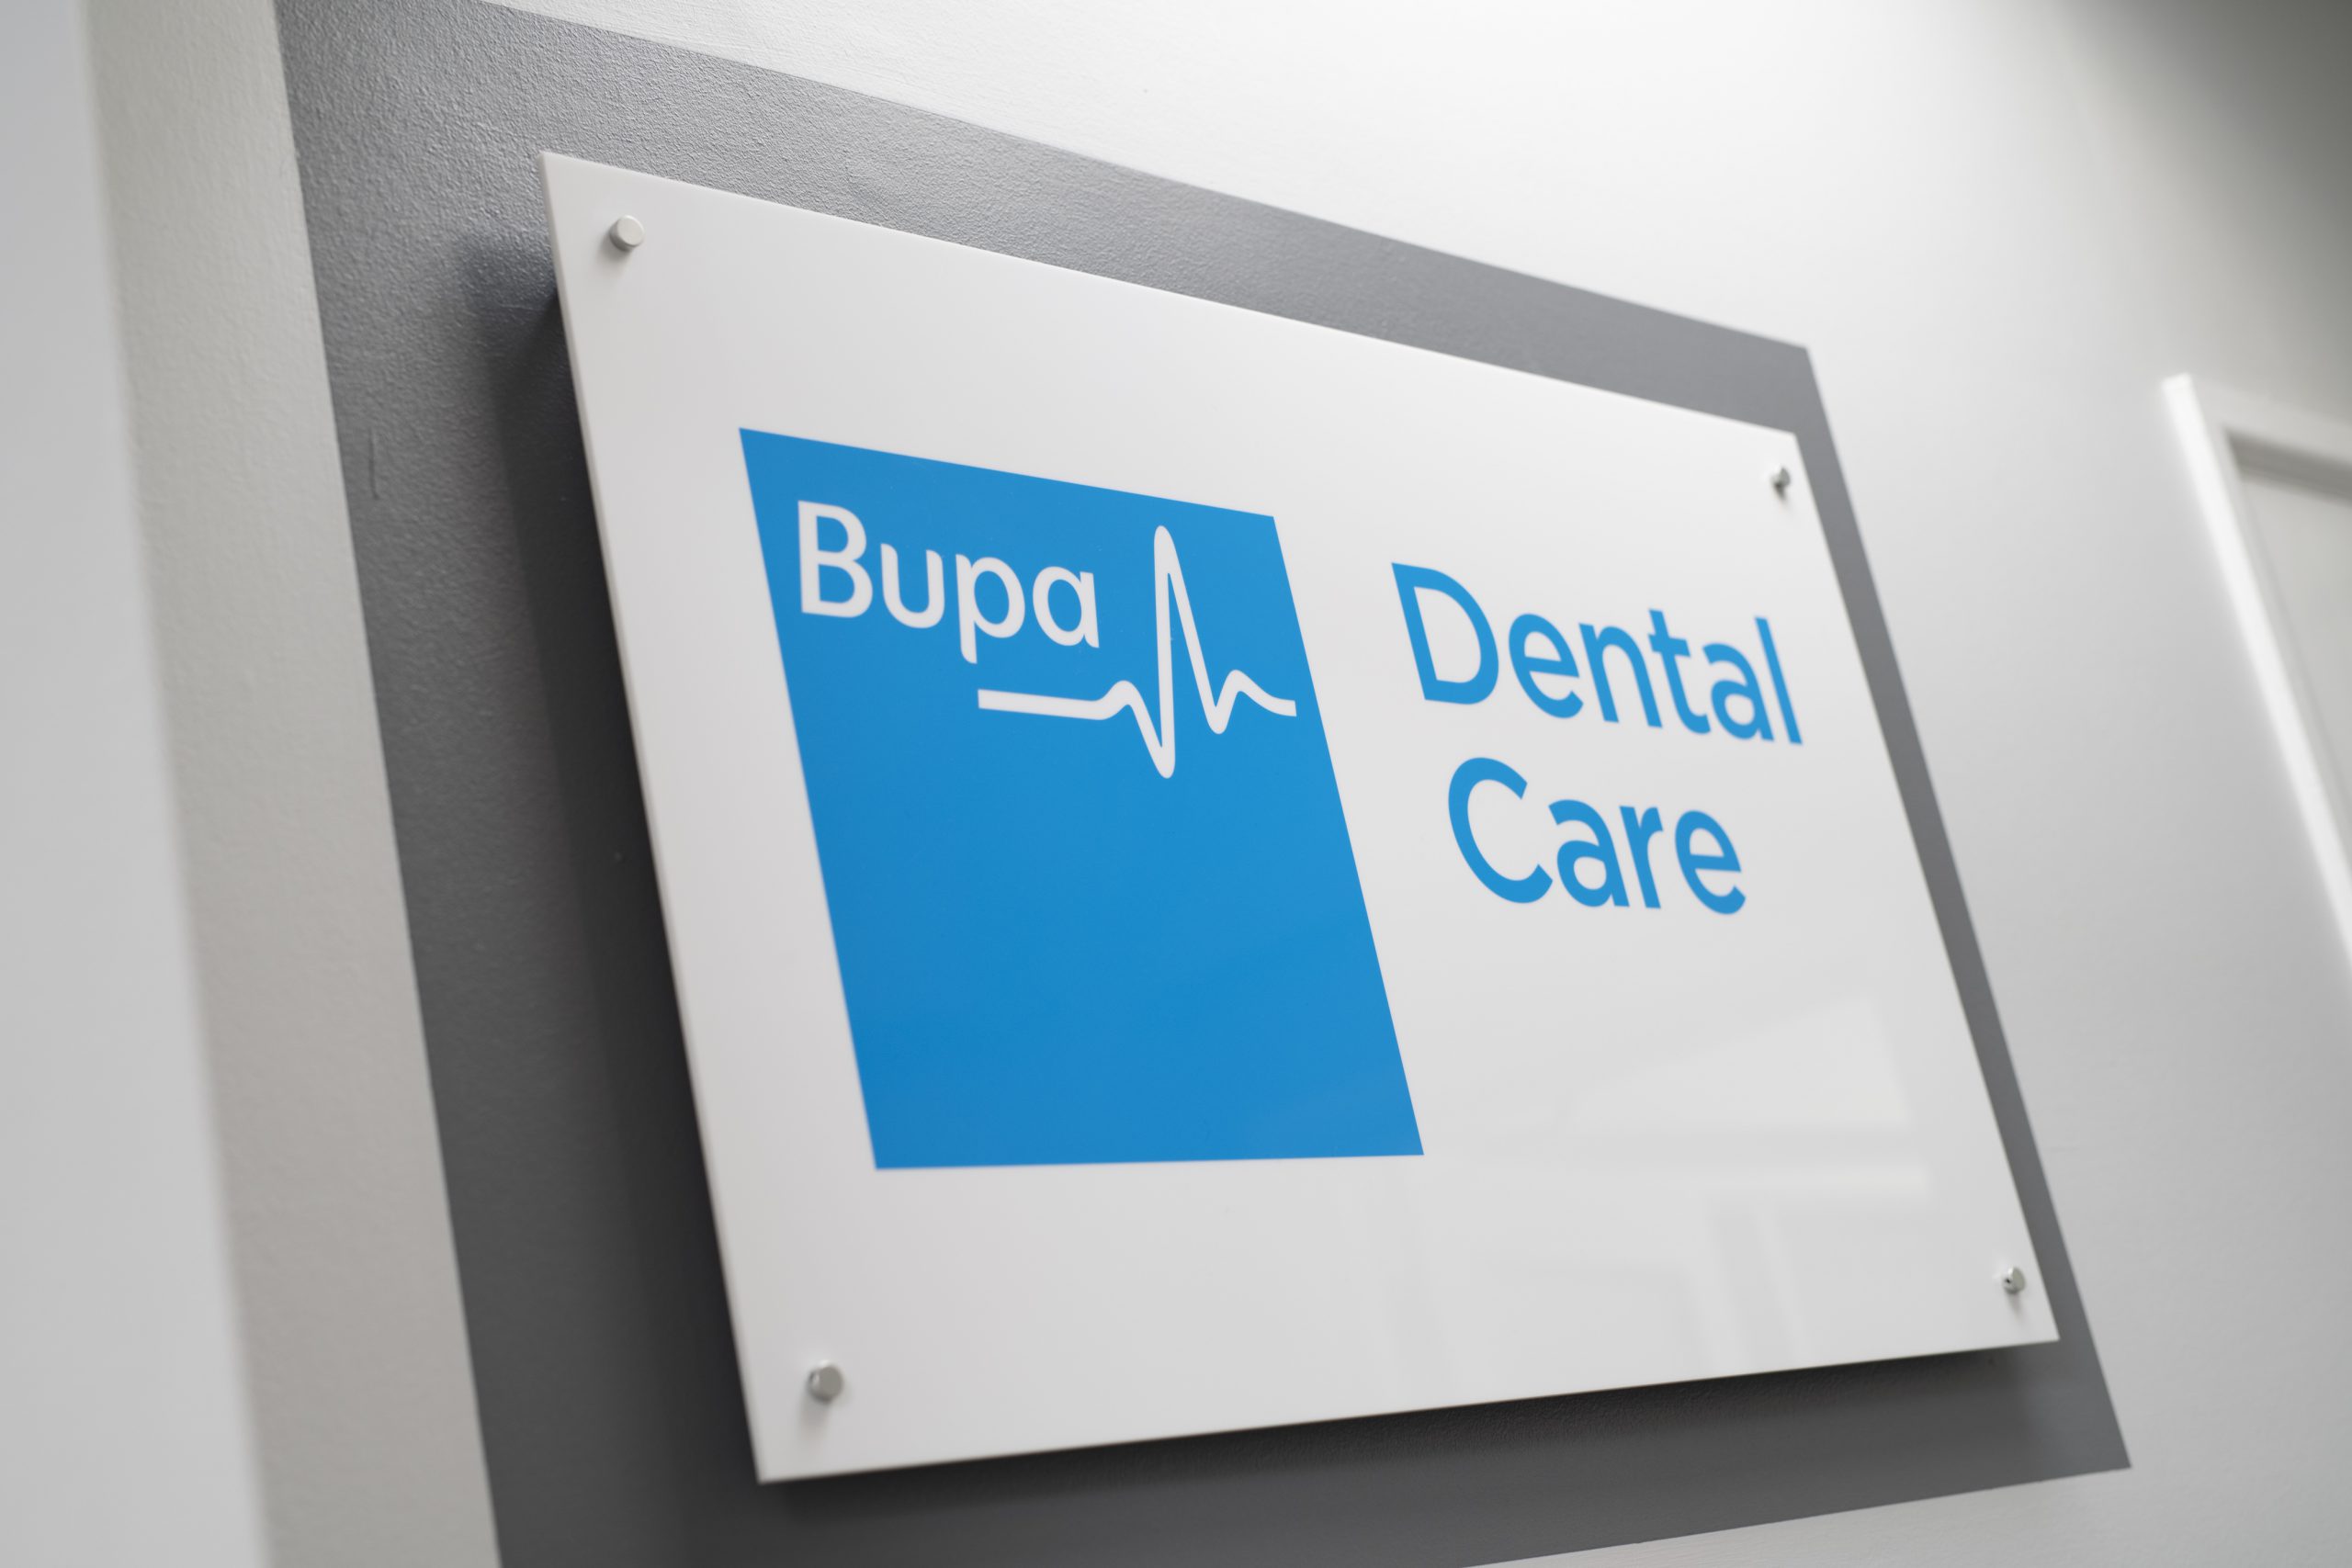 Bupa Dental Care logo on a sign